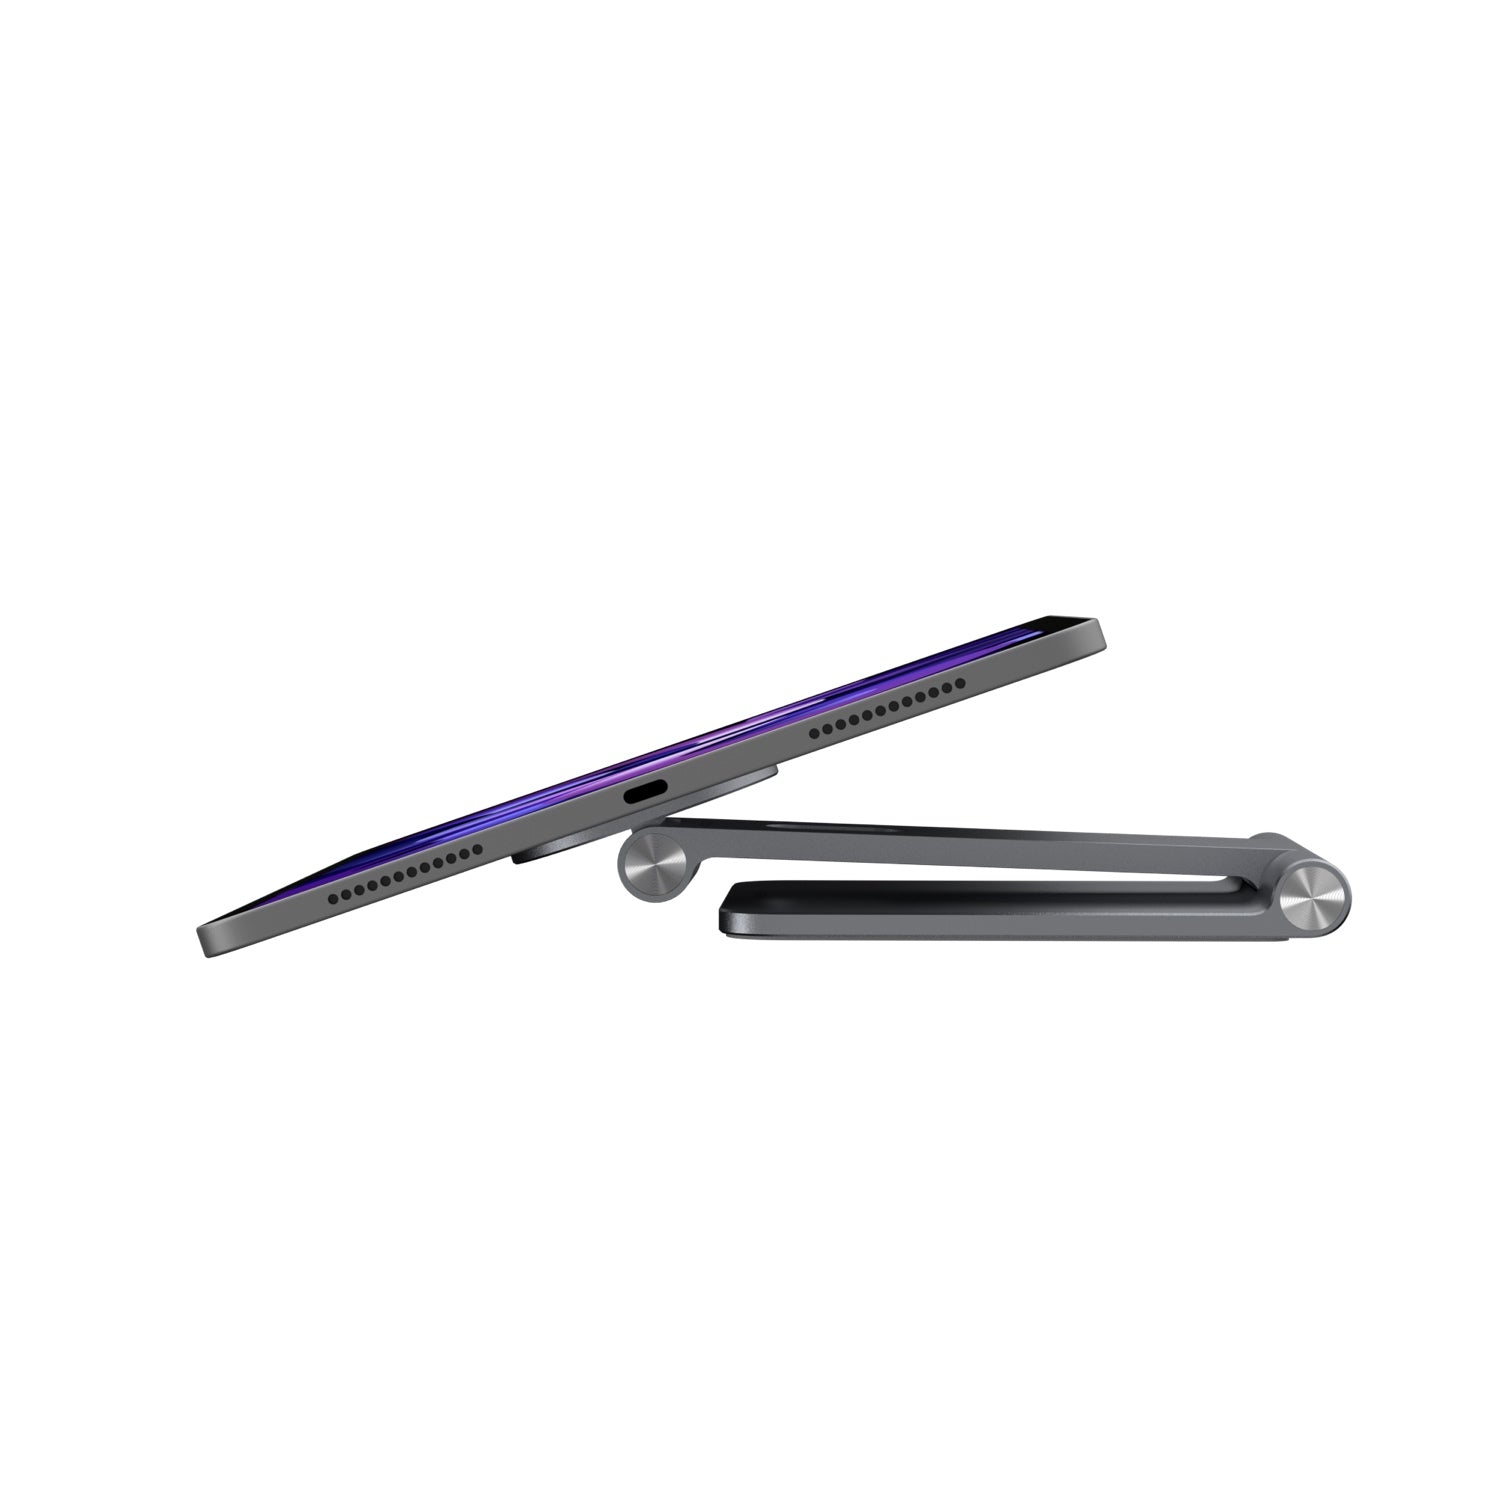 Flipmount Magnetic Hoop iPad/iPhone Stand - Space Grey